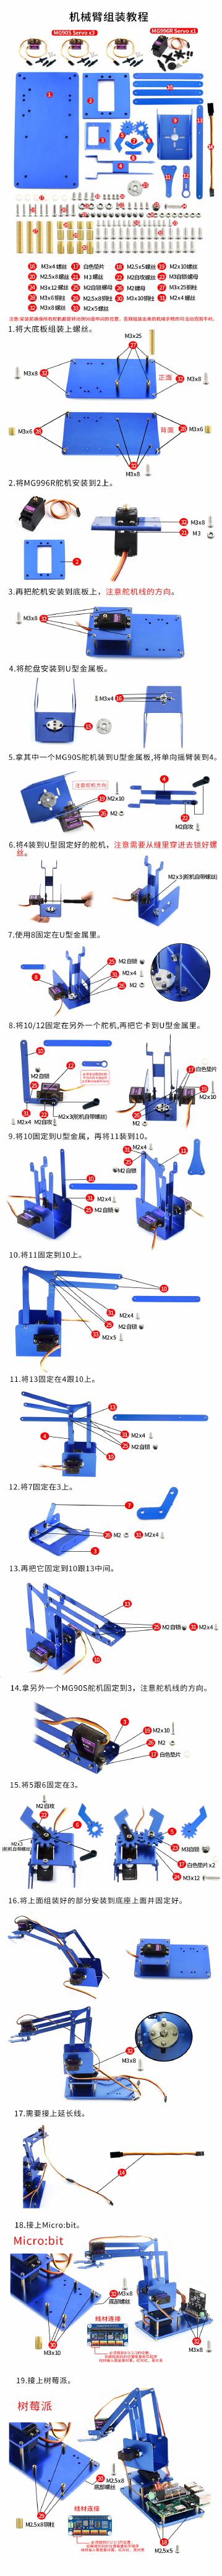 Robot Arm Kit组装图(Robot_arm_kit_assembly_cn).pdf